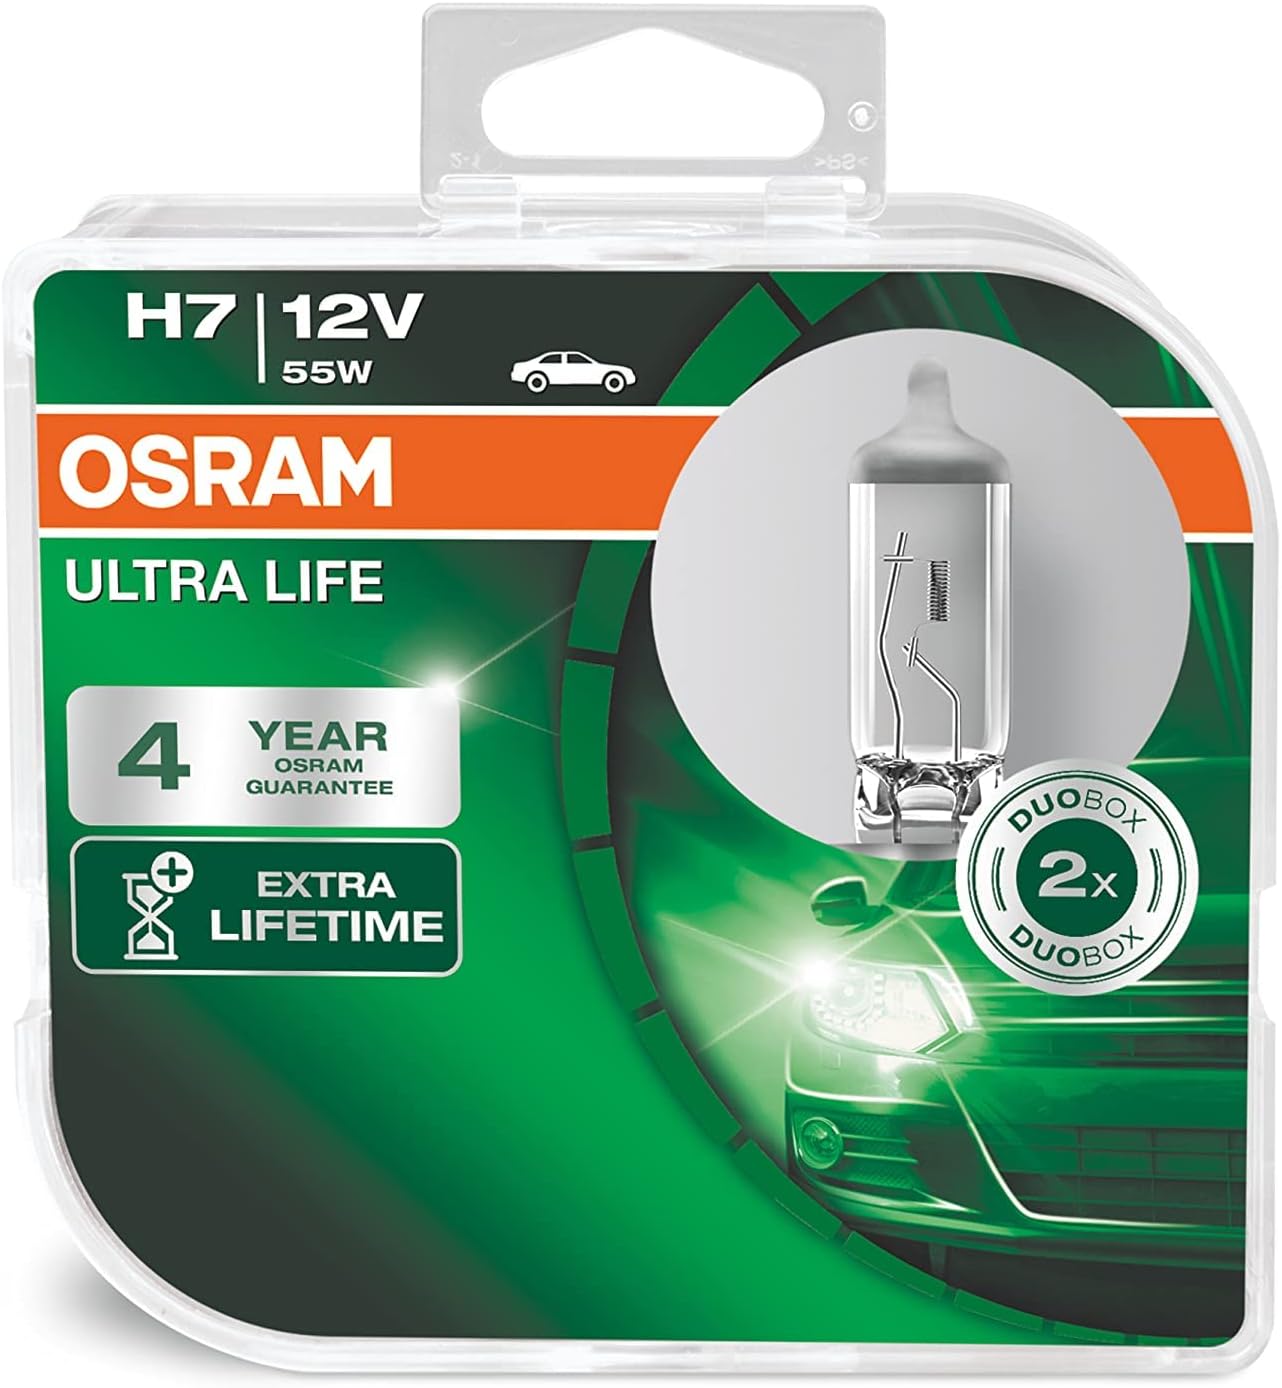 OSRAM ULTRA LIFE H7, halogen headlamp-6558